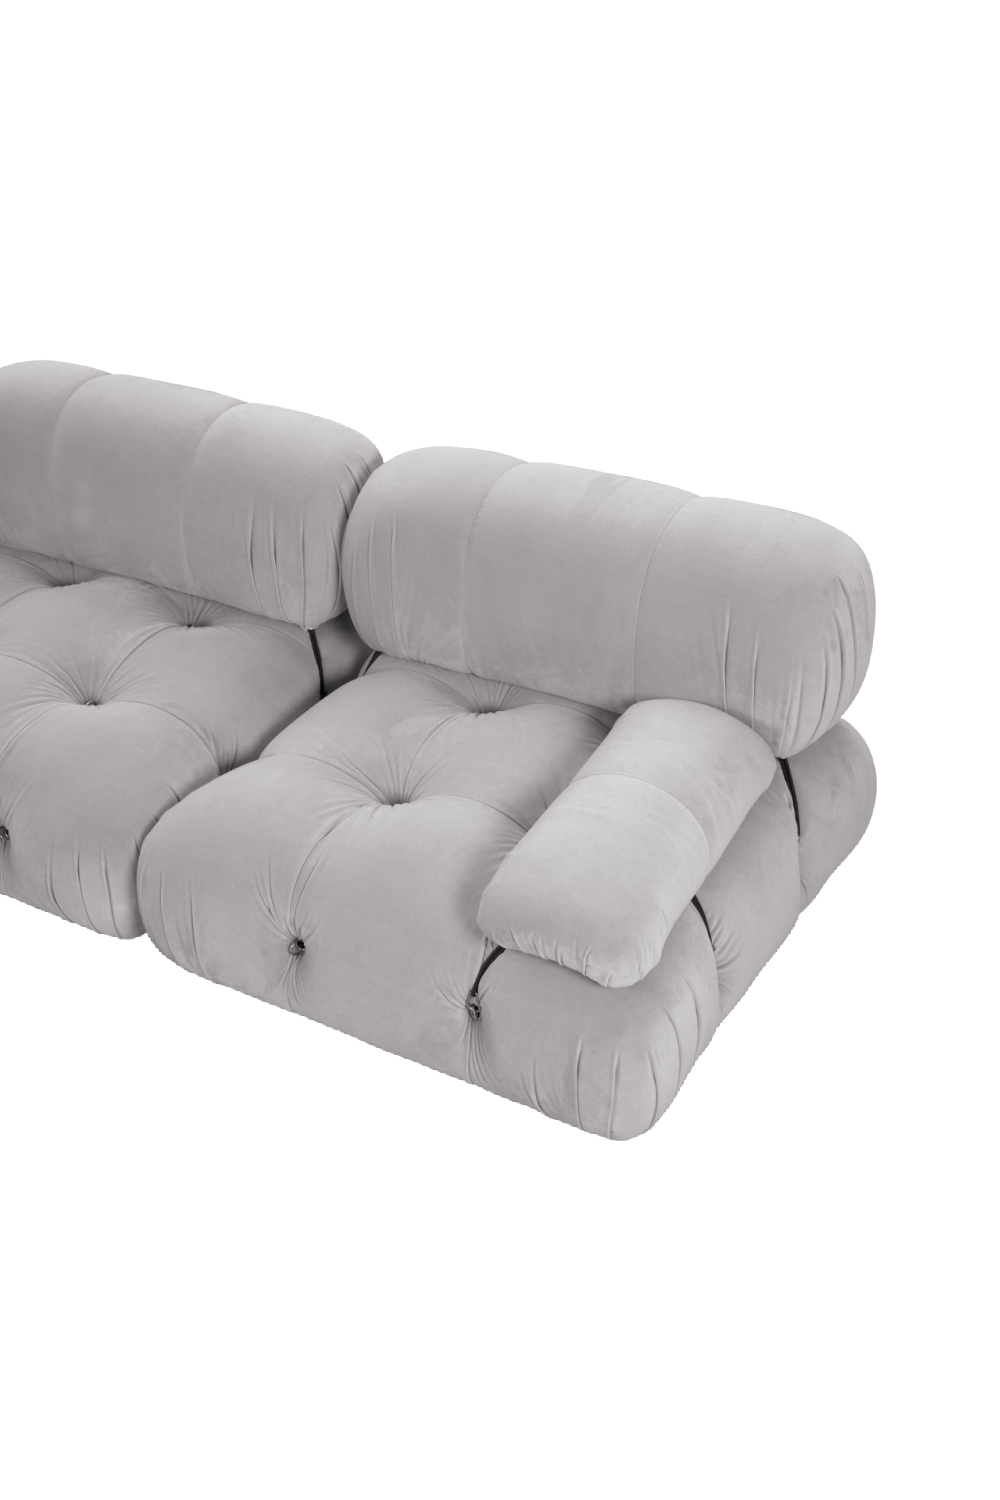 Upholstered Sectional Sofa | Liang & Eimil Combo | Oroa.com